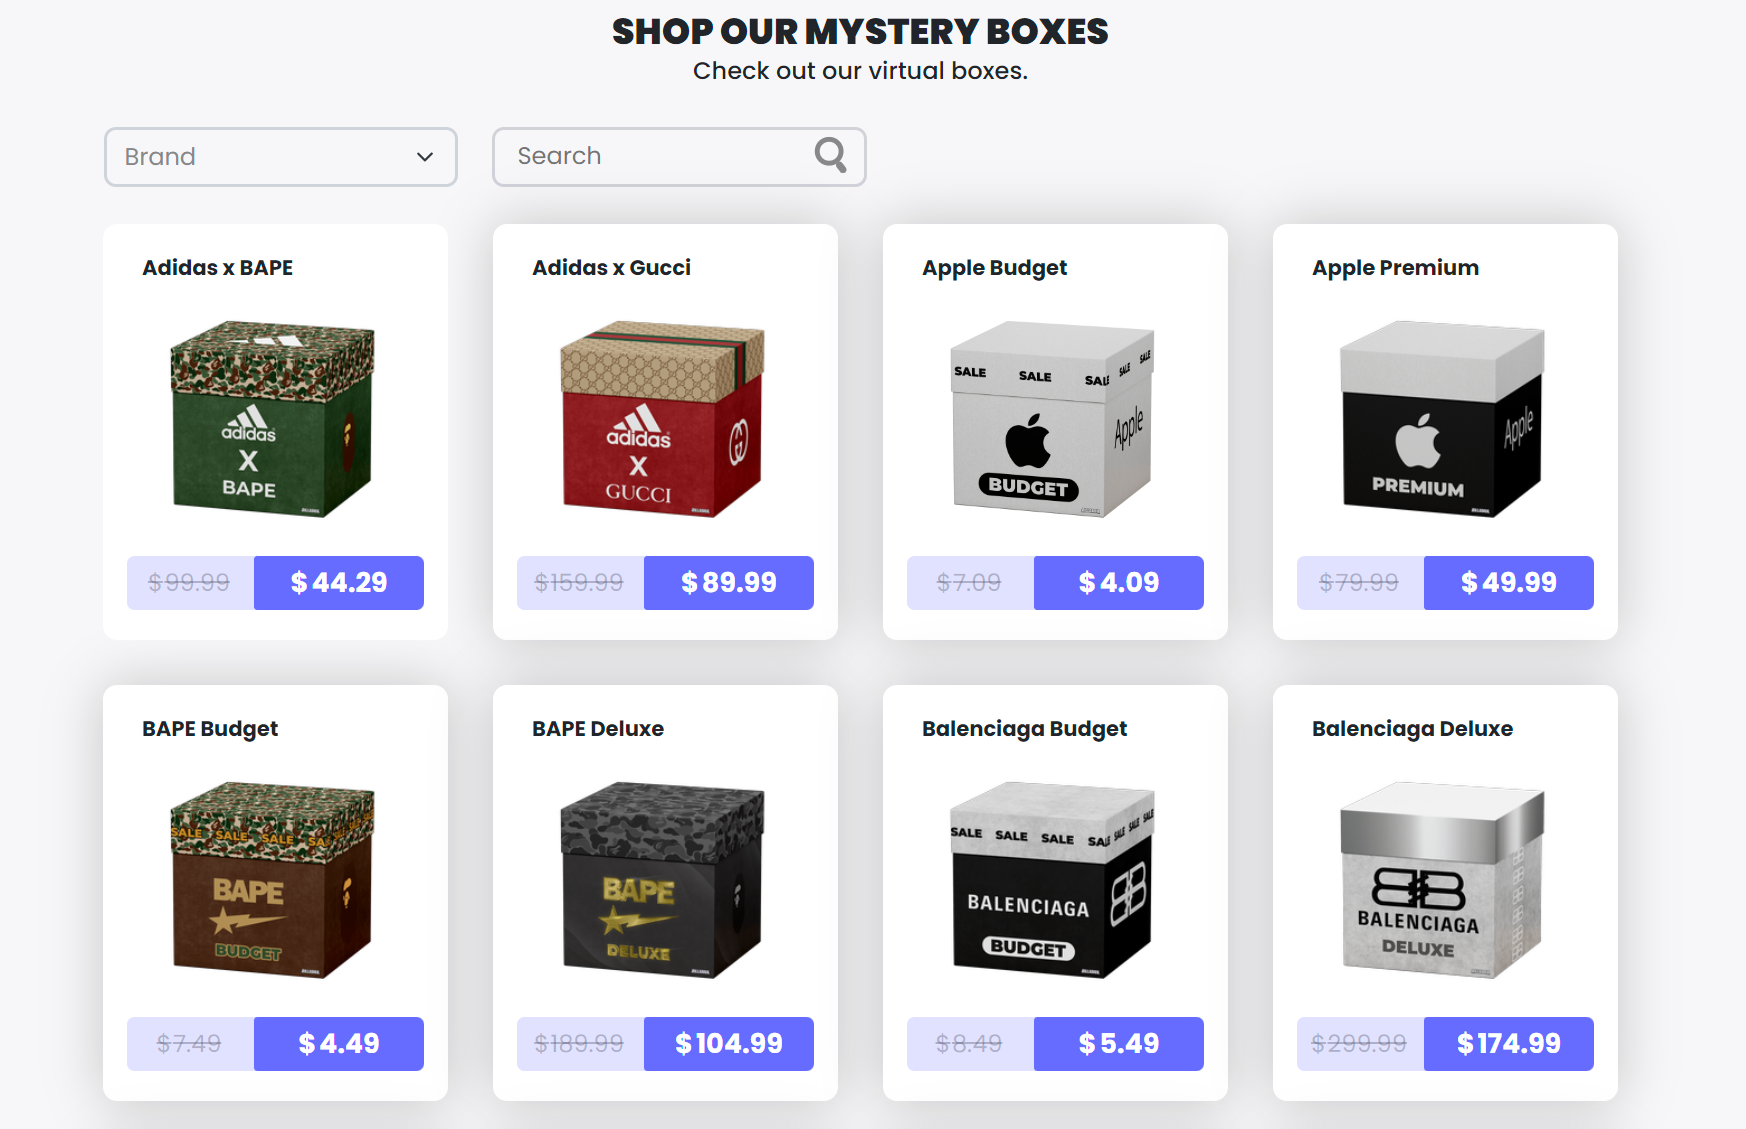 RillaBox's Mystery Box Selection 